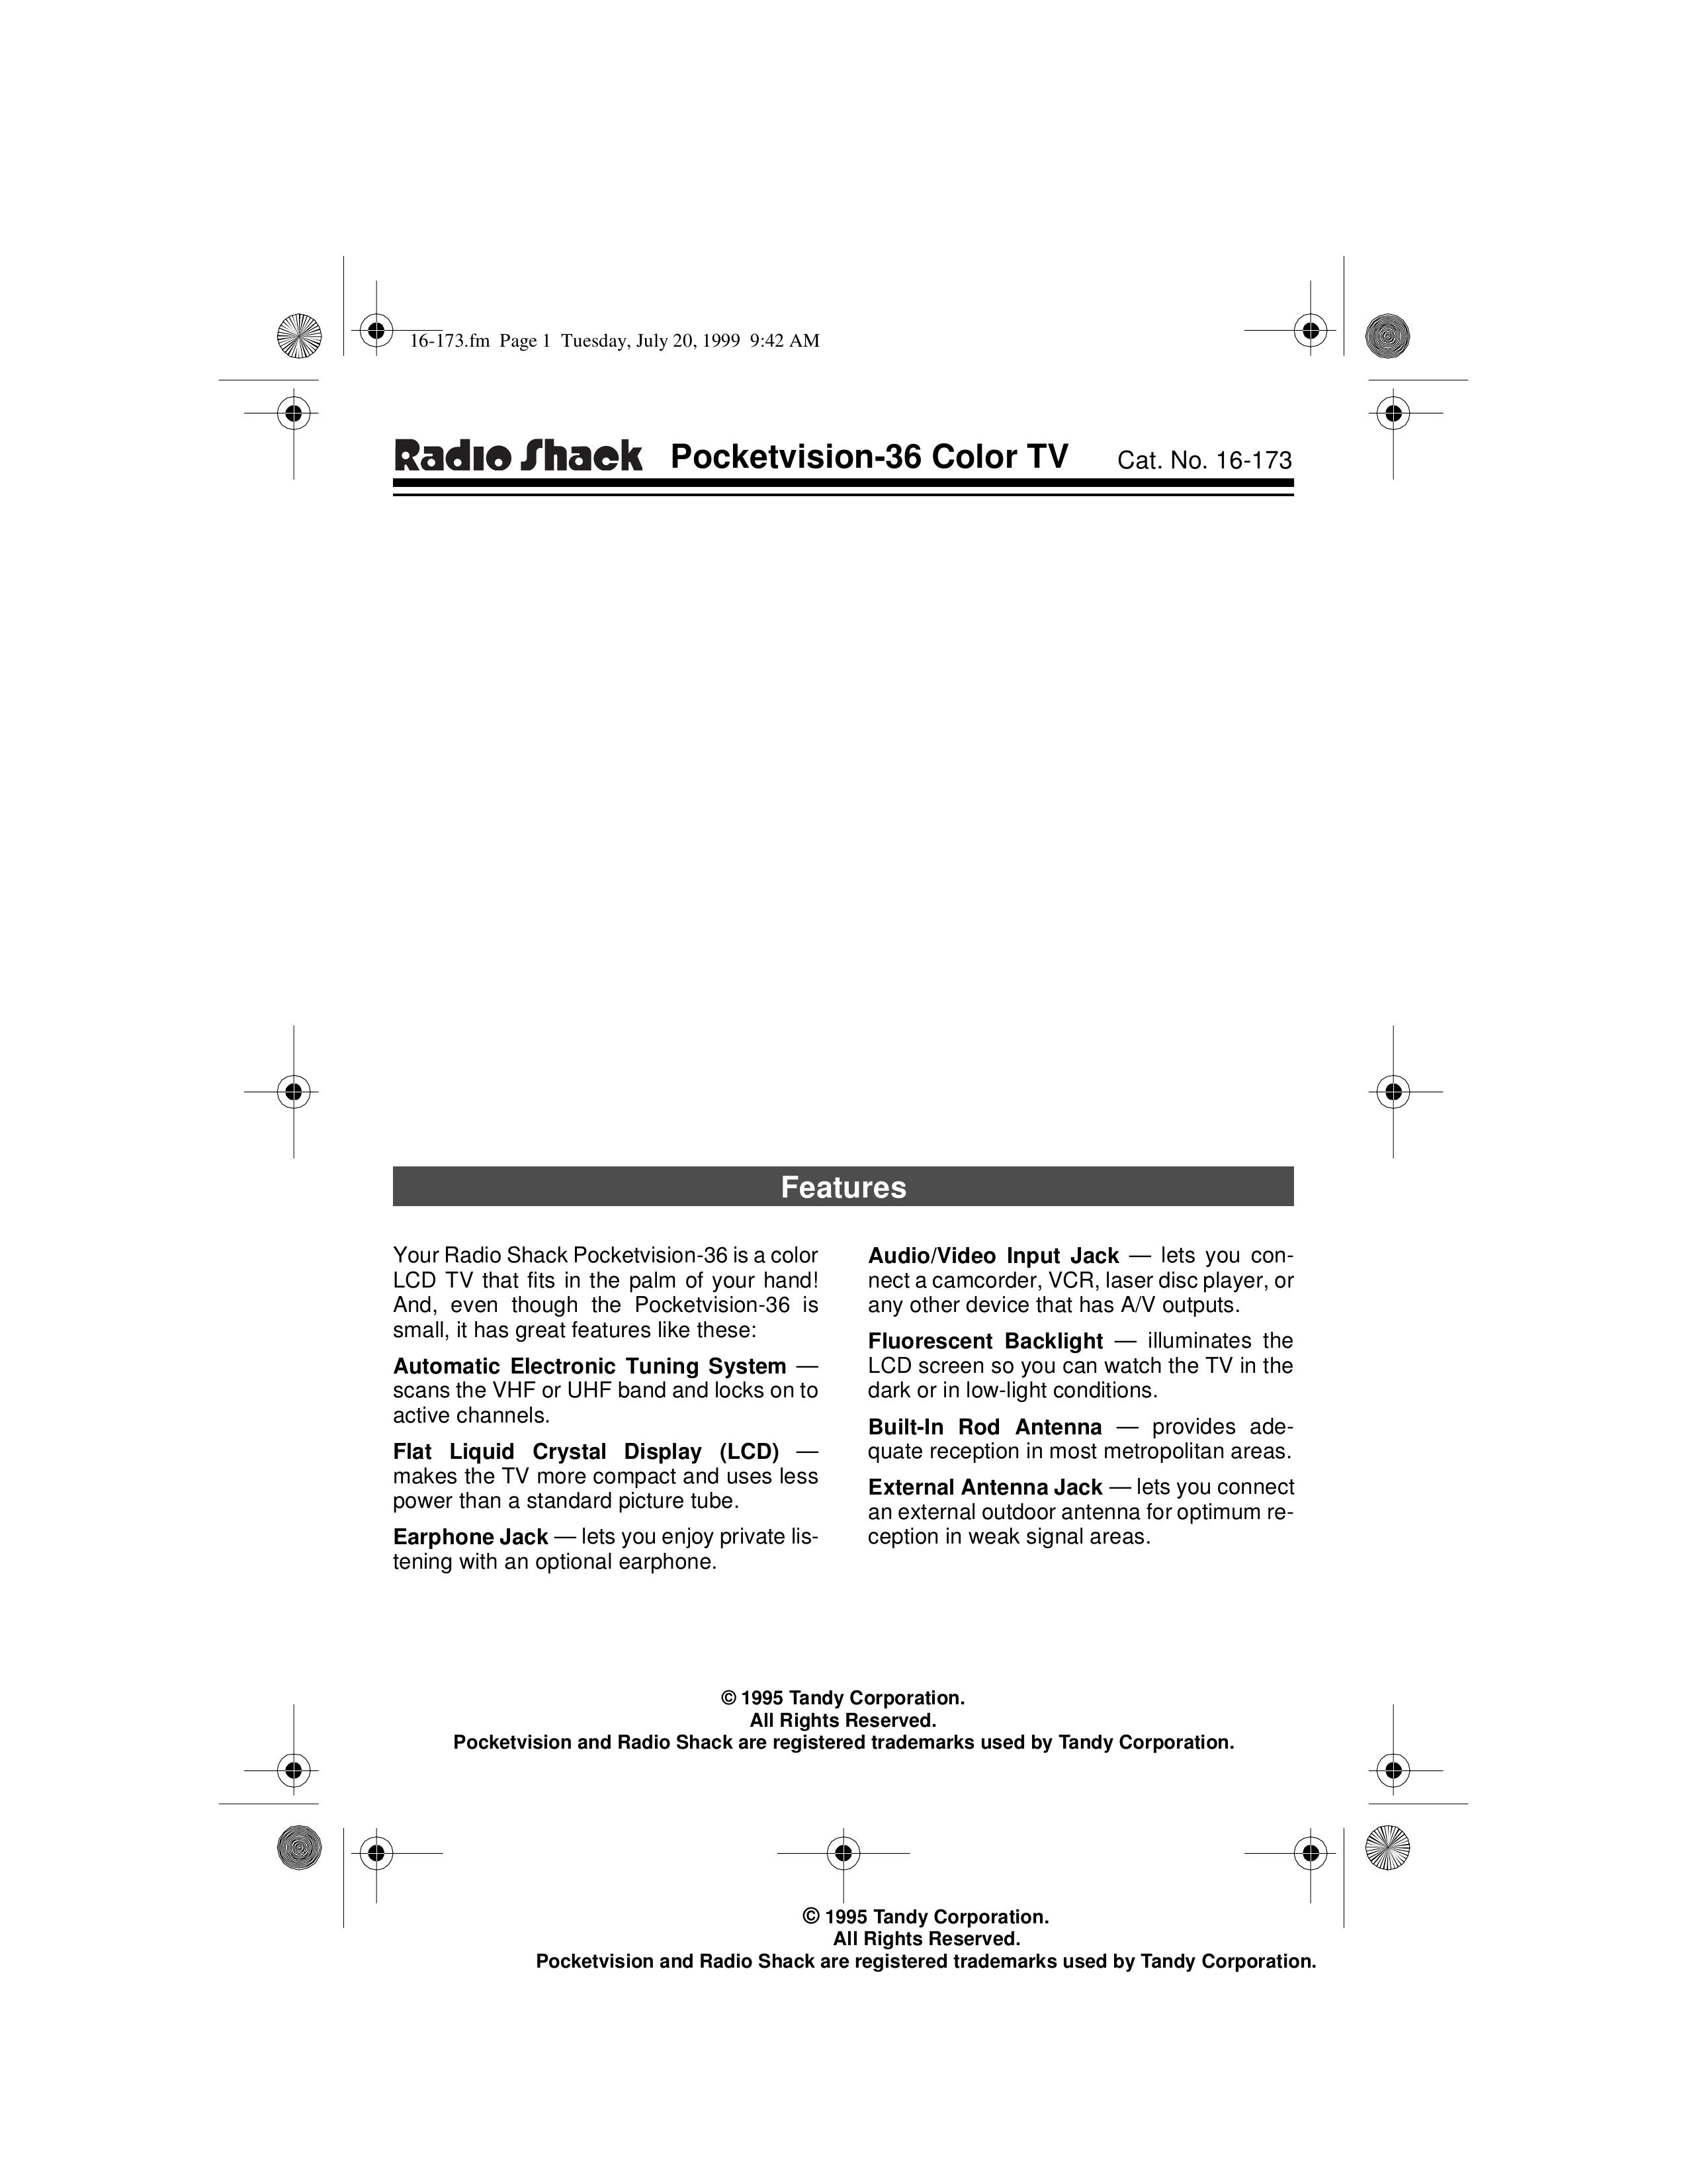 Radio Shack Pocketvision-36 Handheld TV User Manual